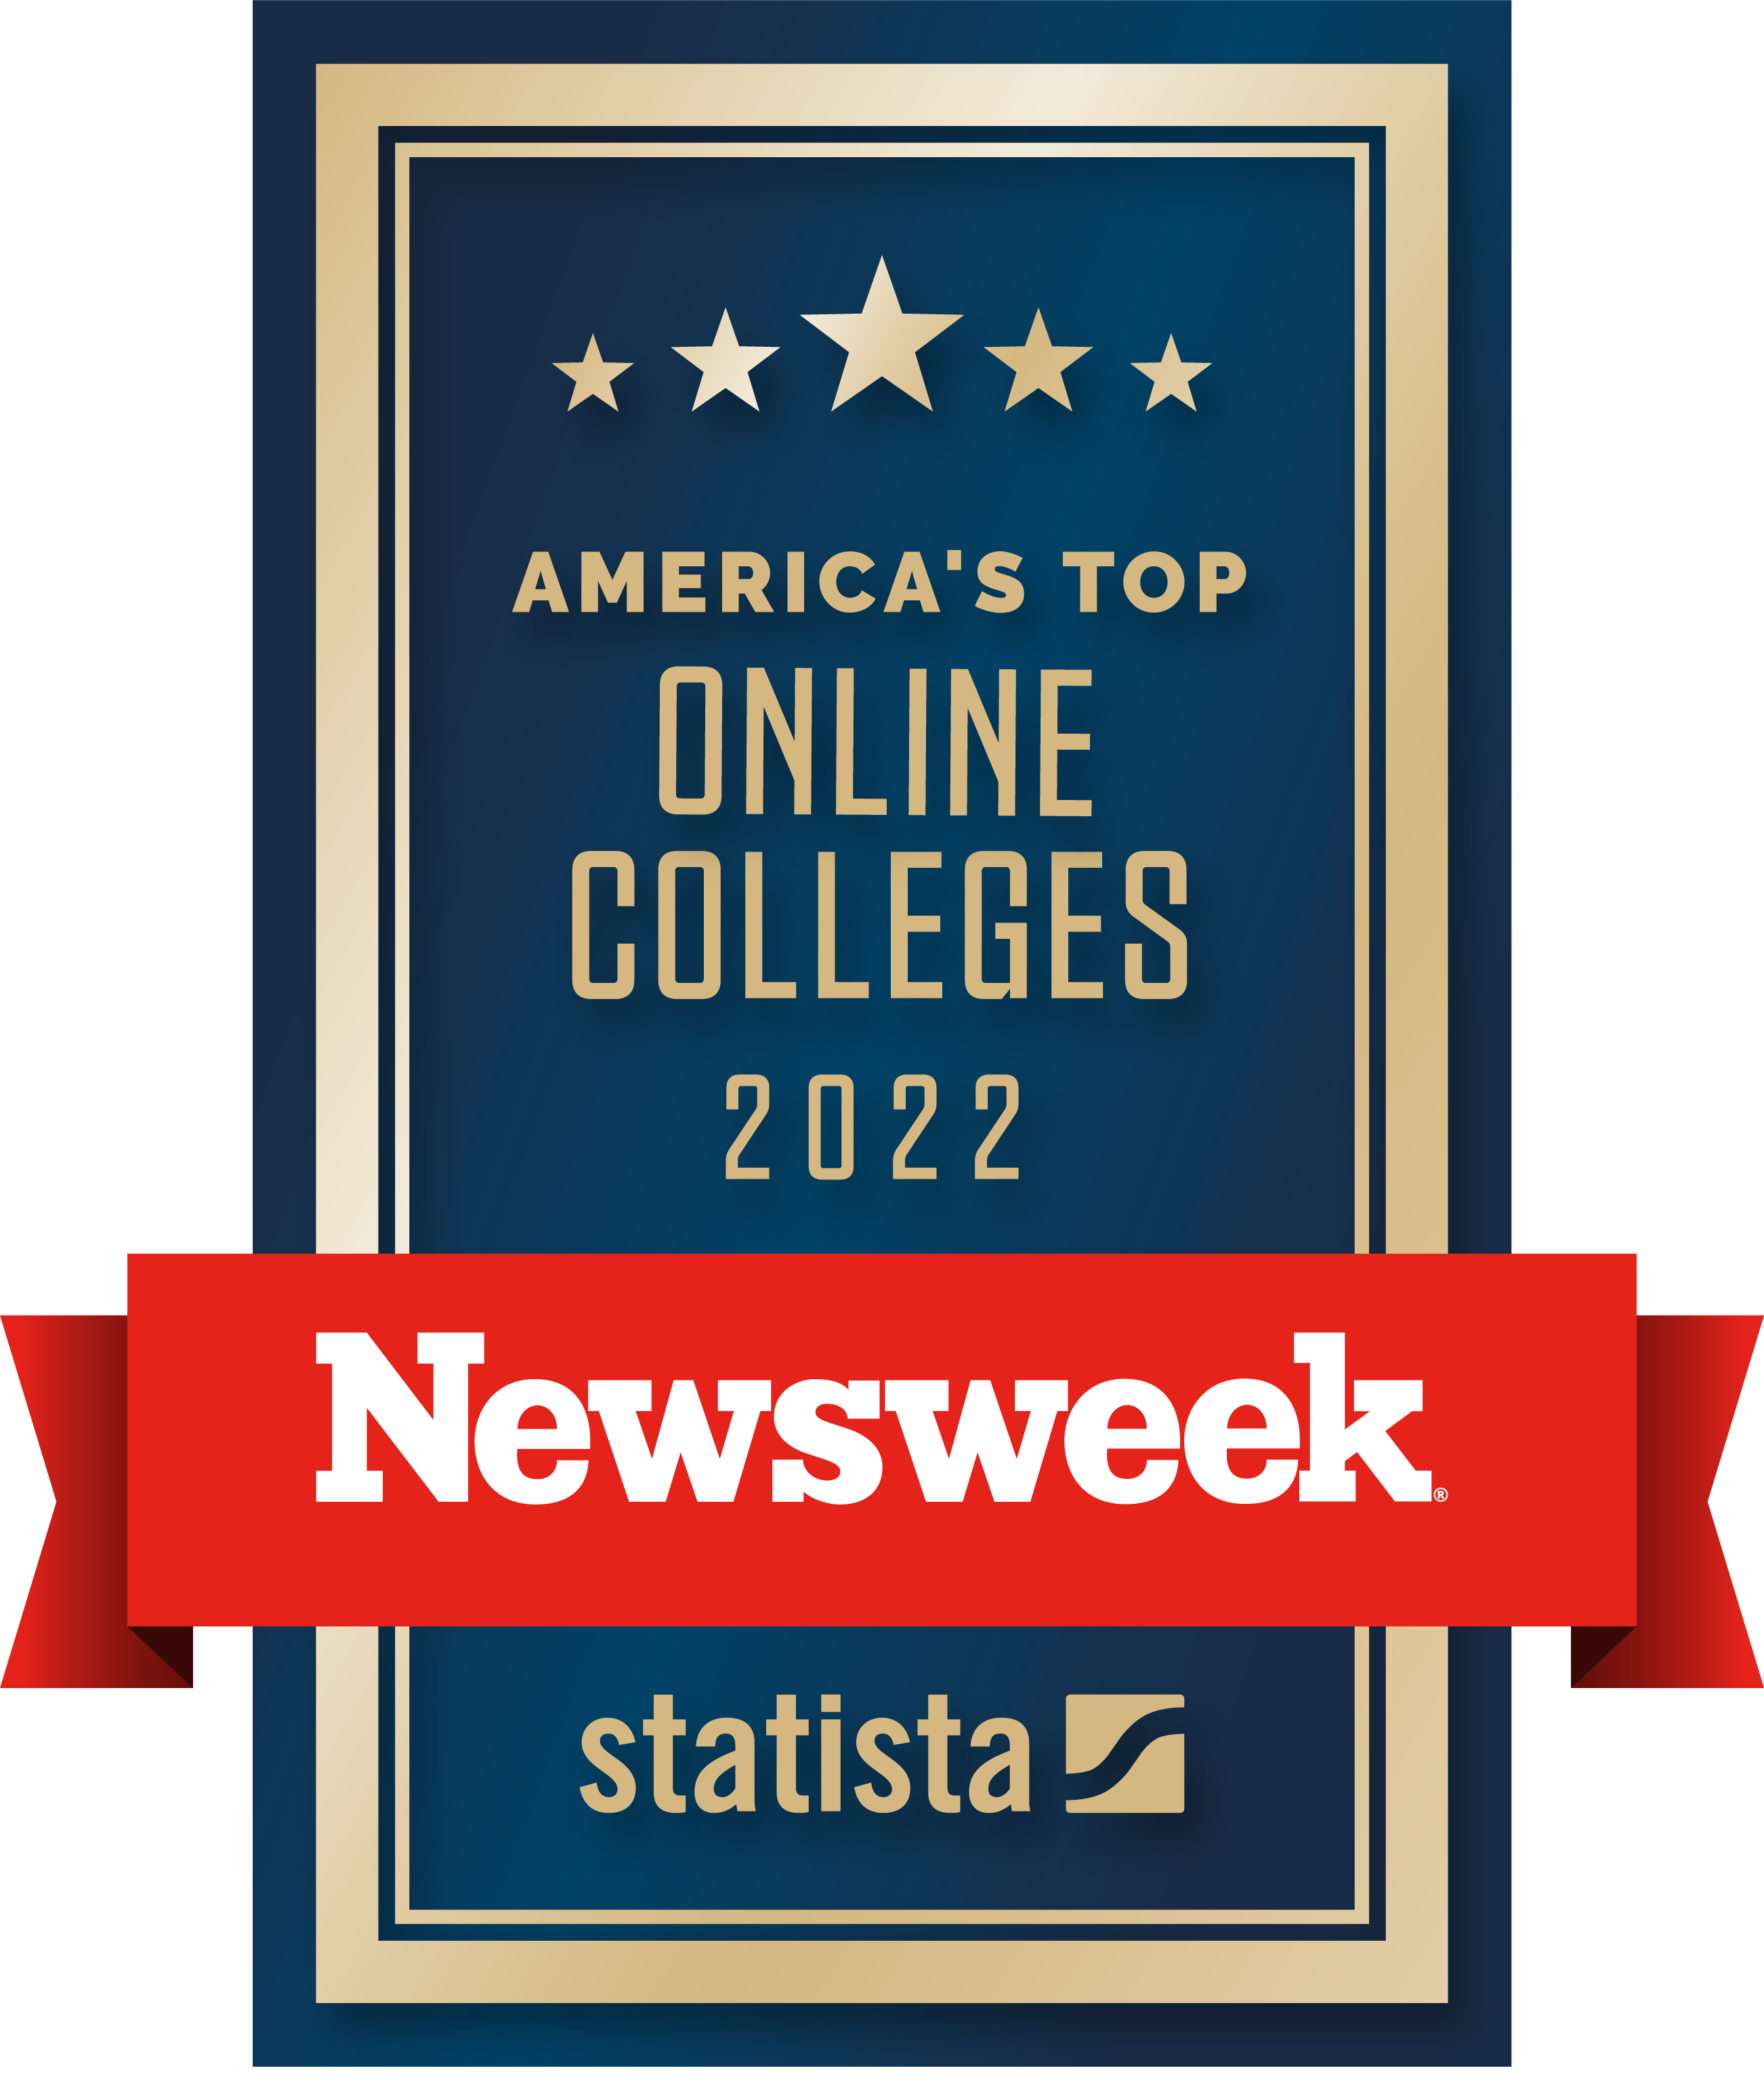 Top Online College, Newsweek